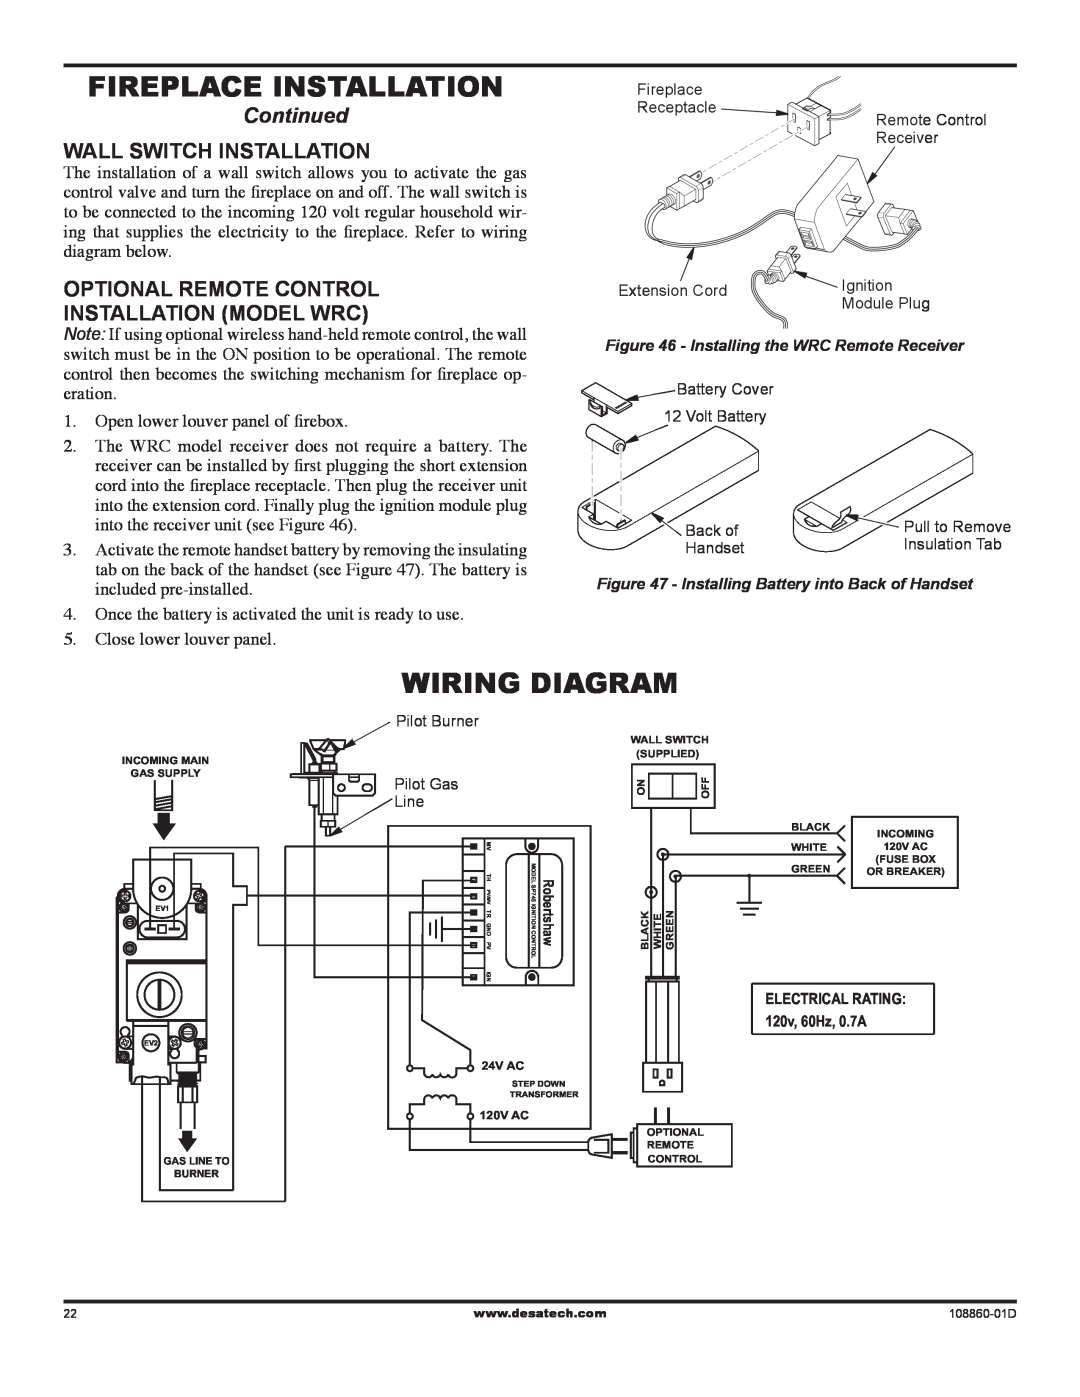 Desa (V)T32EN installation manual Wiring Diagram, Fireplace Installation, Continued, Wall Switch Installation 